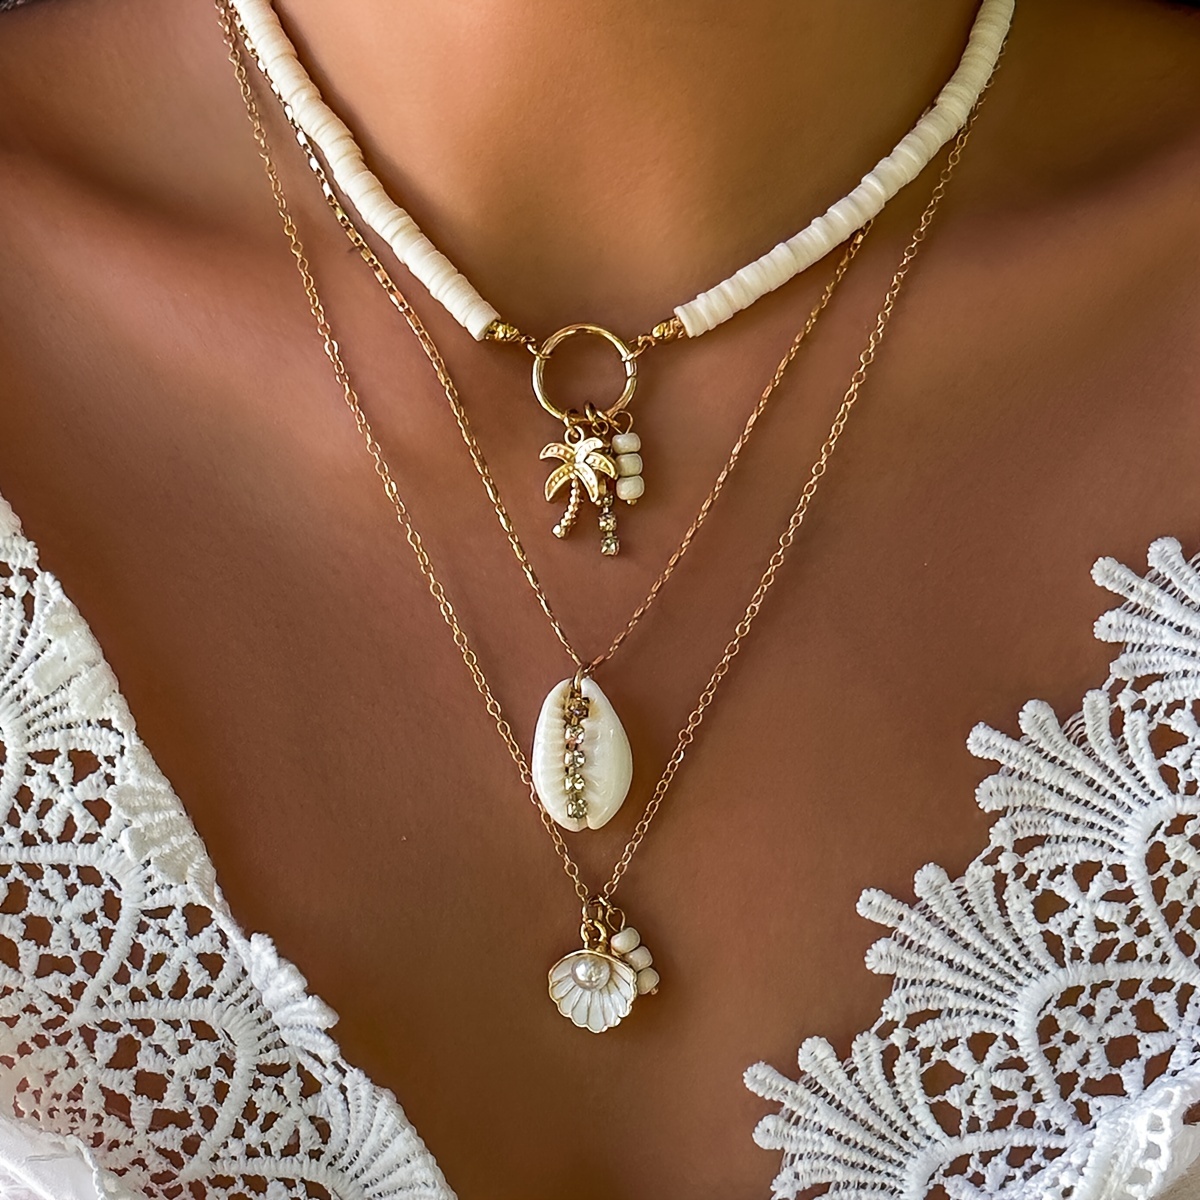 

3pcs/set Imitation Shell Scallop Pendant Necklace, Bohemian Vacation Style Coconut Trees Charm Decor White Bead Beaded Necklace Beach Holiday Jewelry